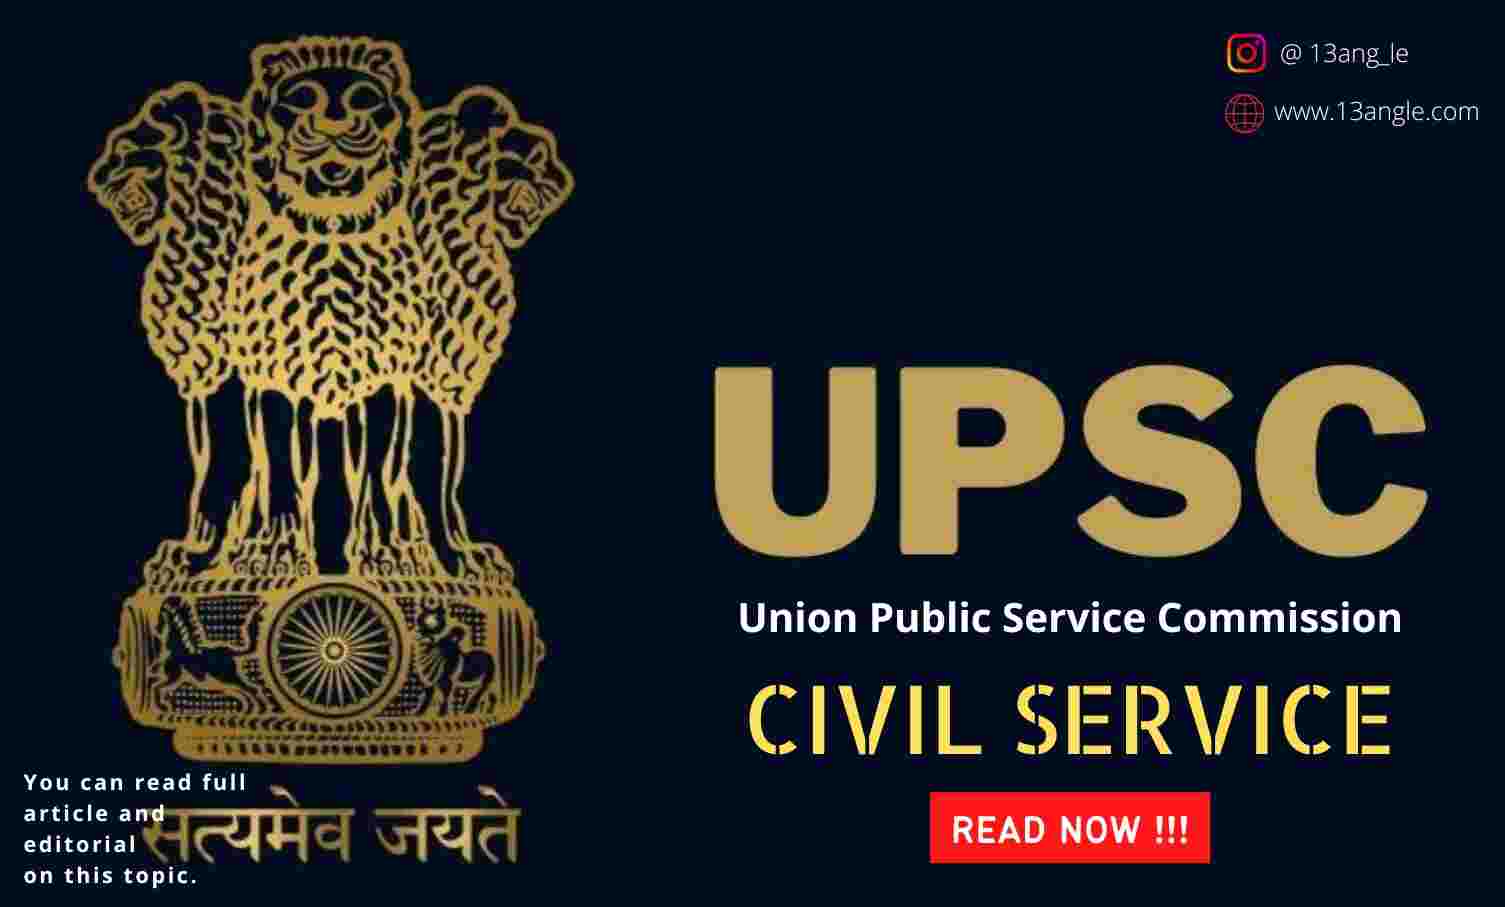 Union Public Service Commission- 13angle.com